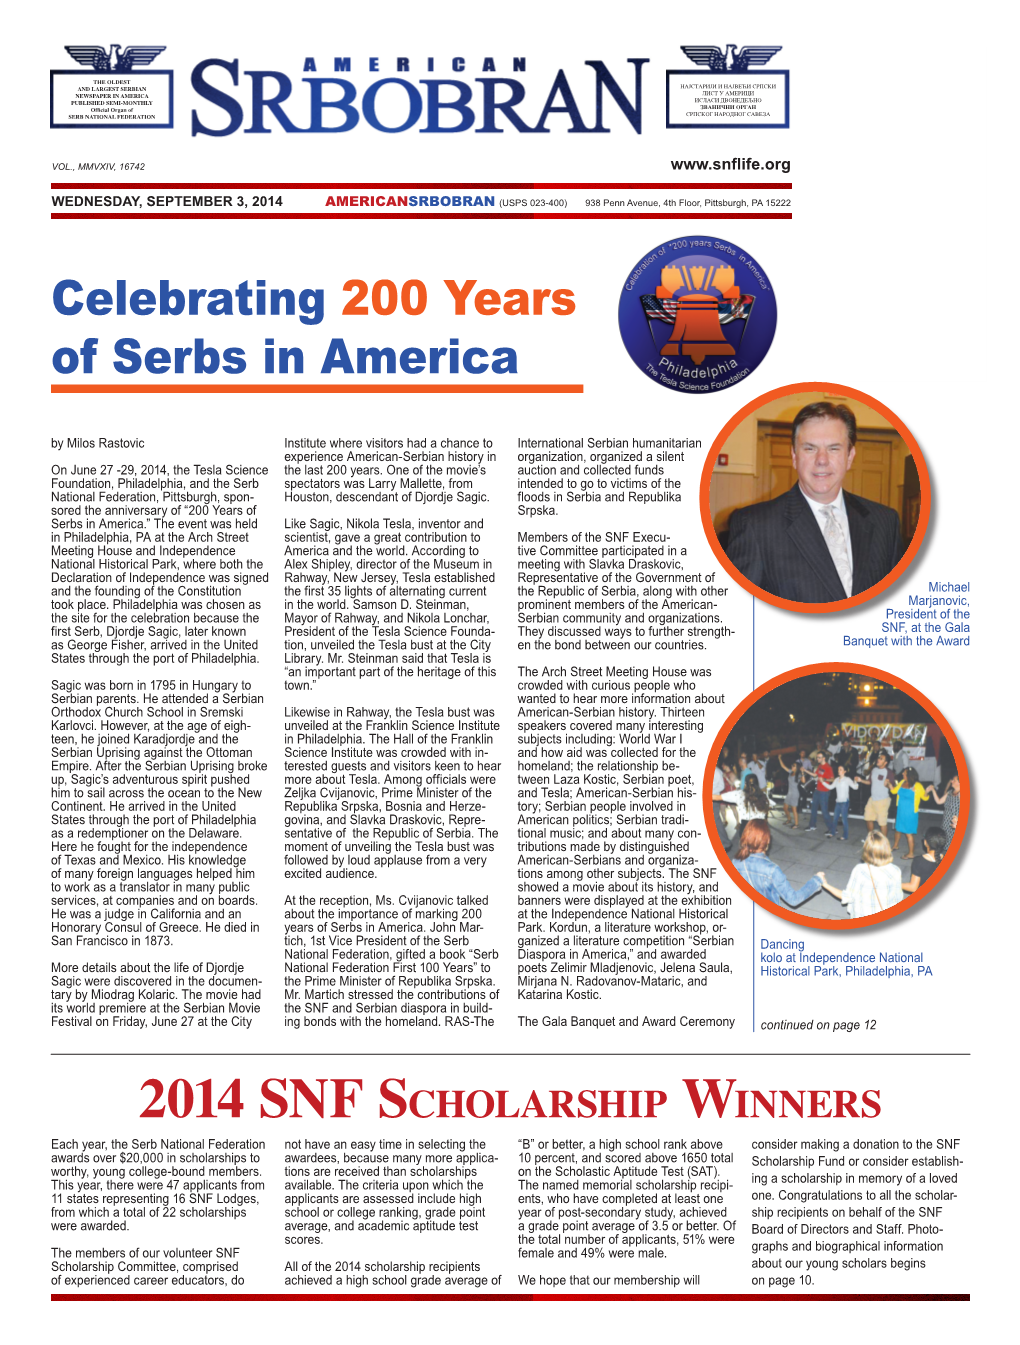 Celebrating 200 Years of Serbs in America